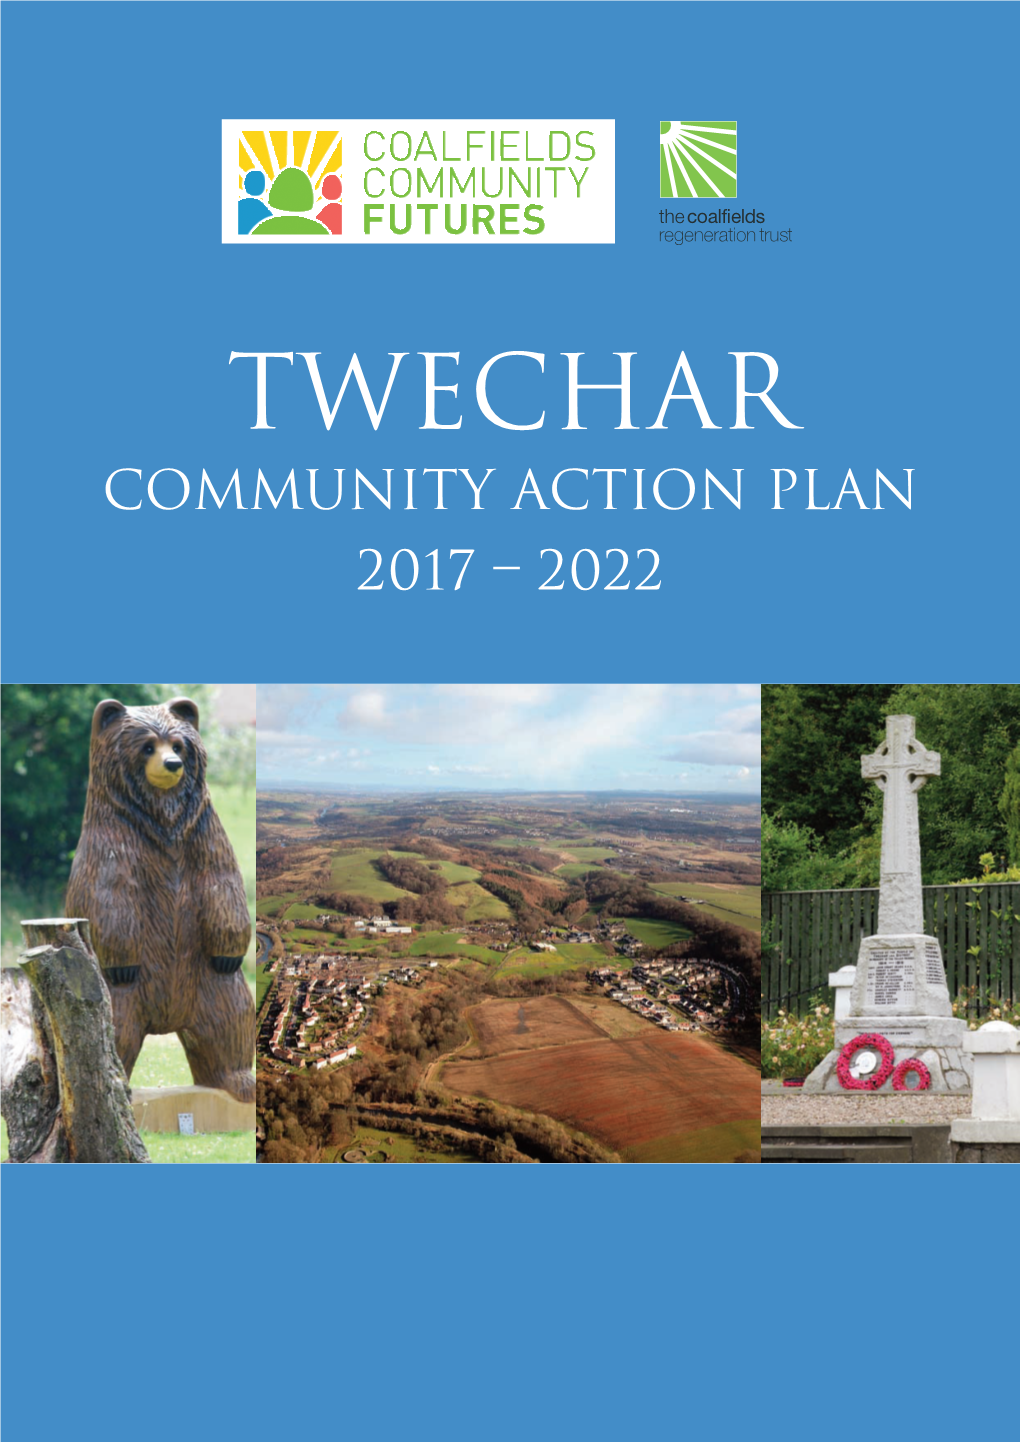 Twechar Community Action Plan 2017-2022